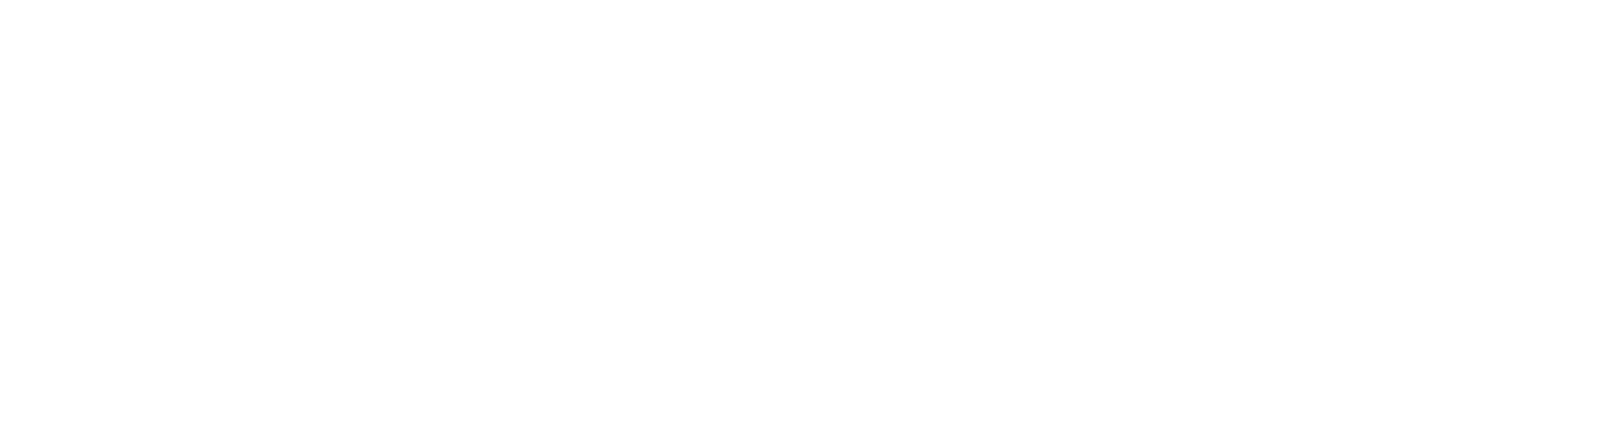 Ally-Hub